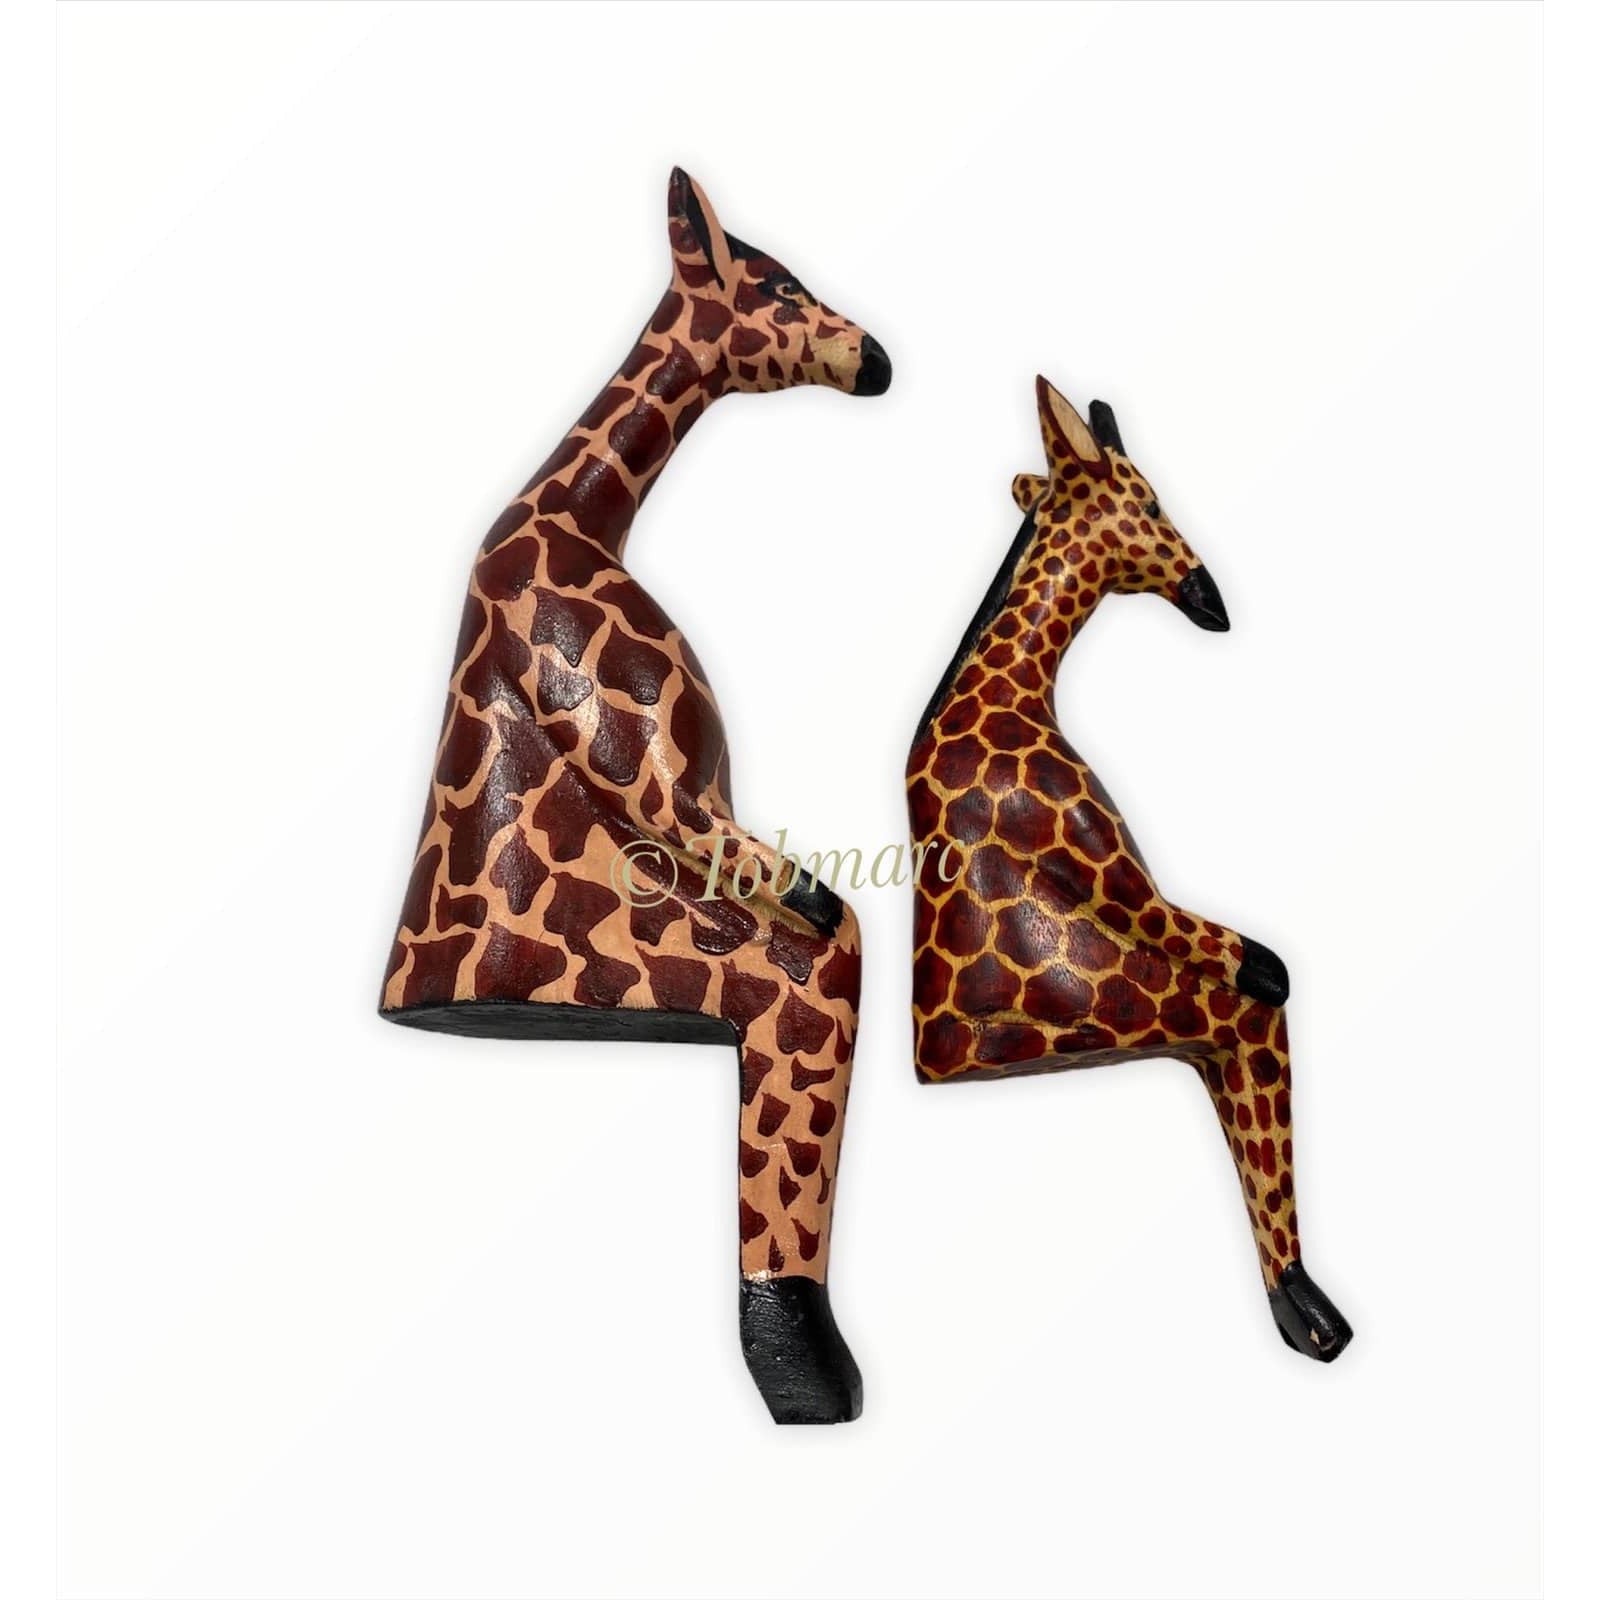 Tobmarc Home Decor & Gifts  Sculpture & Carvings African Sitting Animal, Wooden Zebra, Giraffe Home Decor, Decoration for Book Shelf